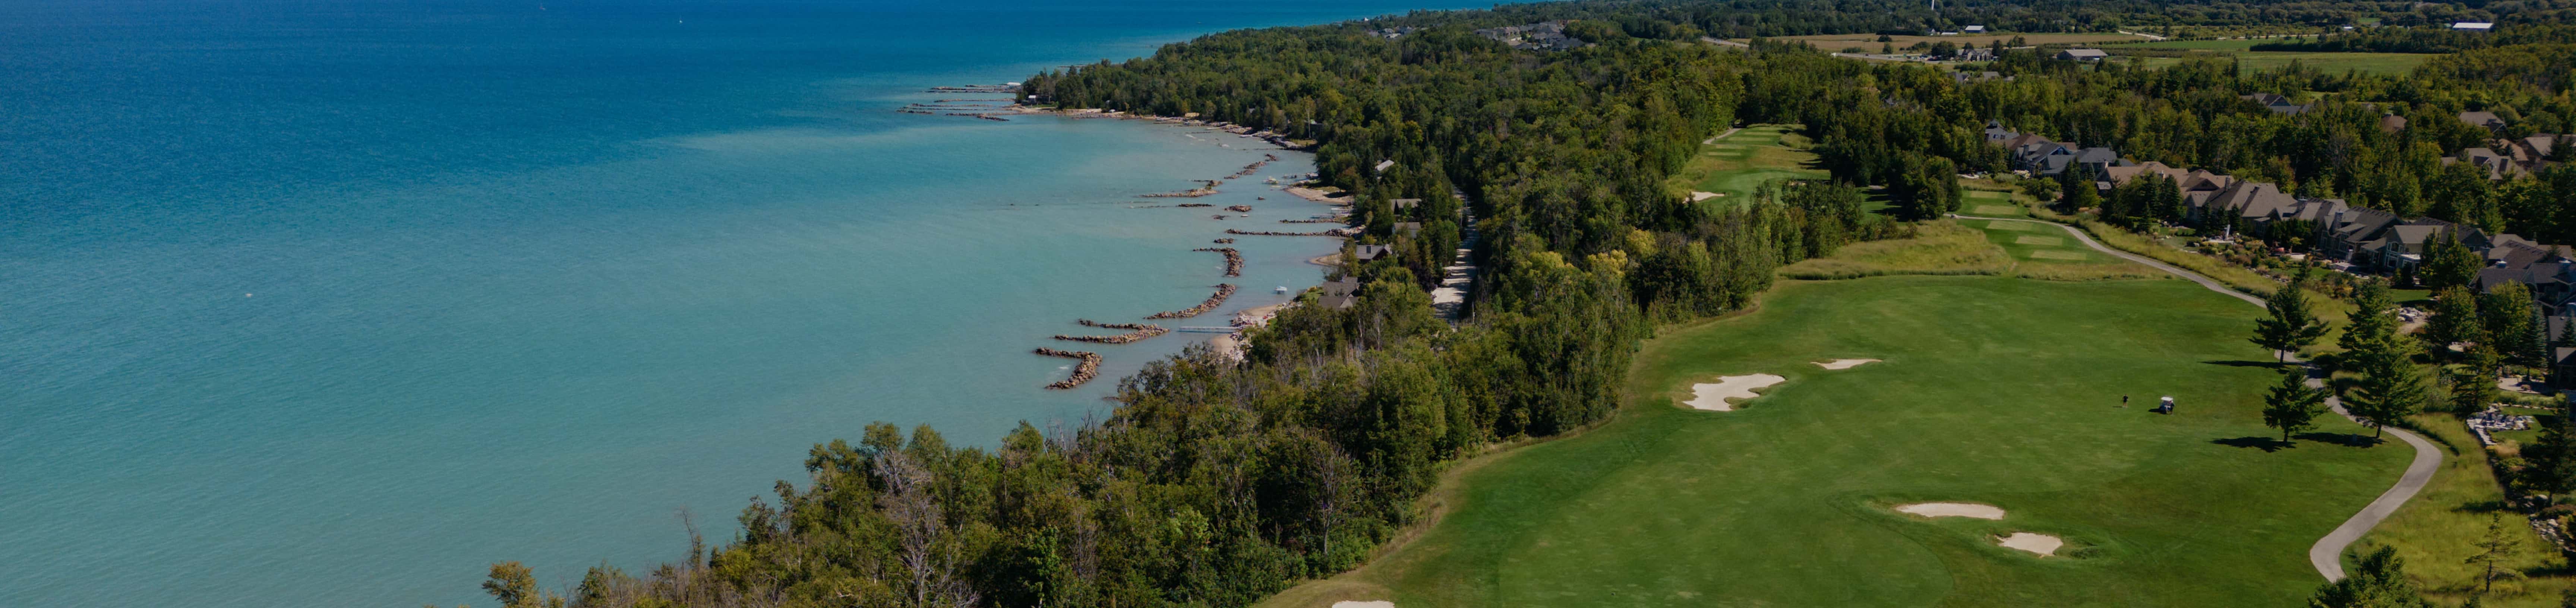 Lora Bay Golf Site image